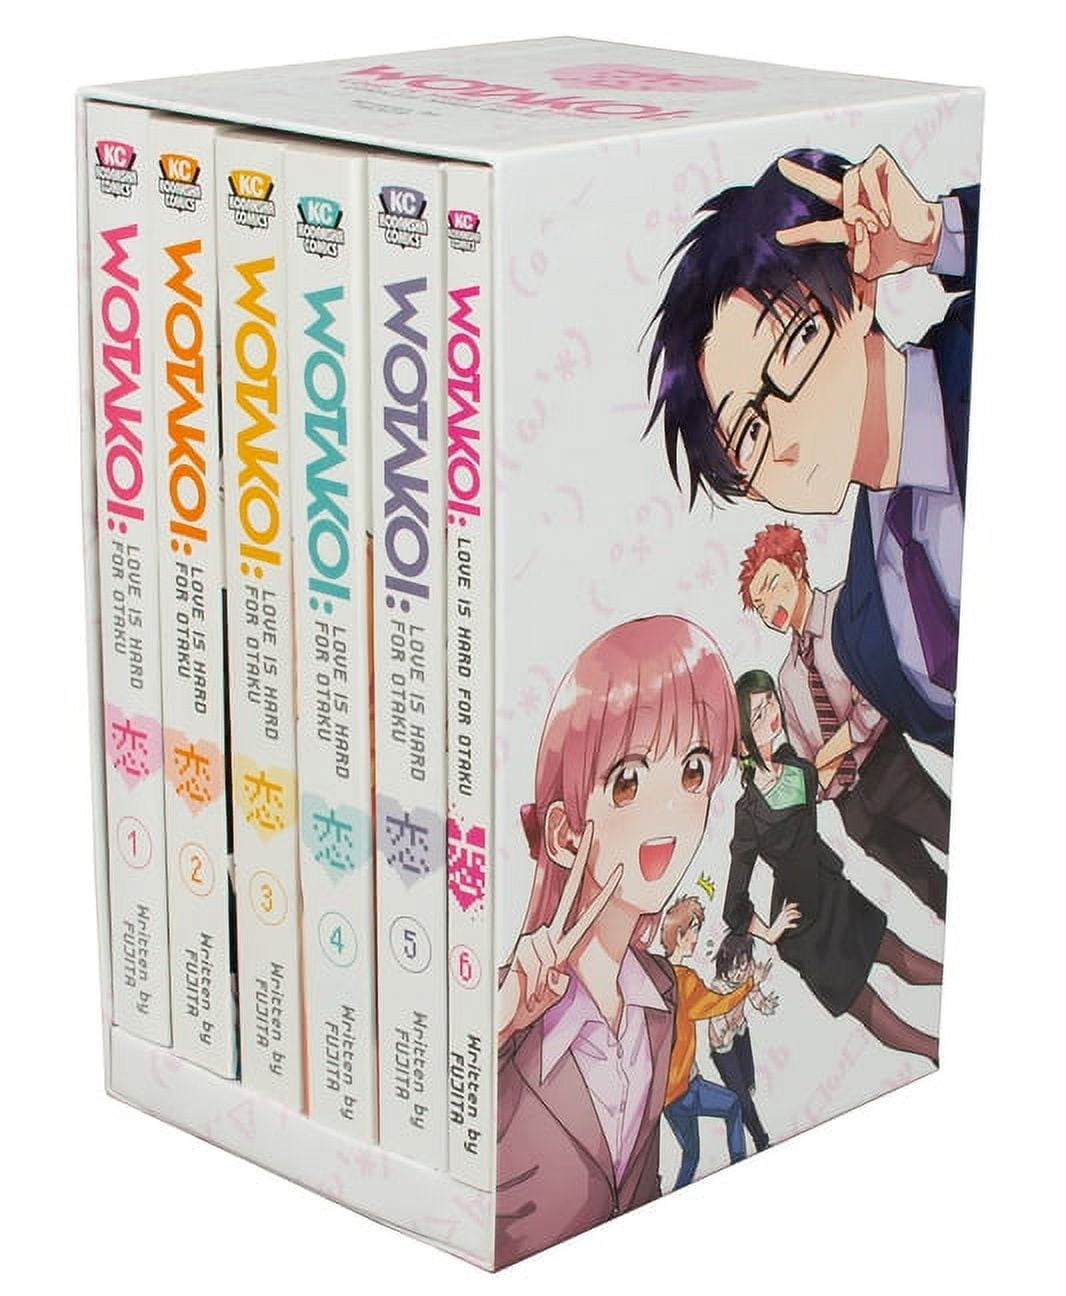 Wotakoi Box Set: Wotakoi: Love Is Hard for Otaku Complete Manga